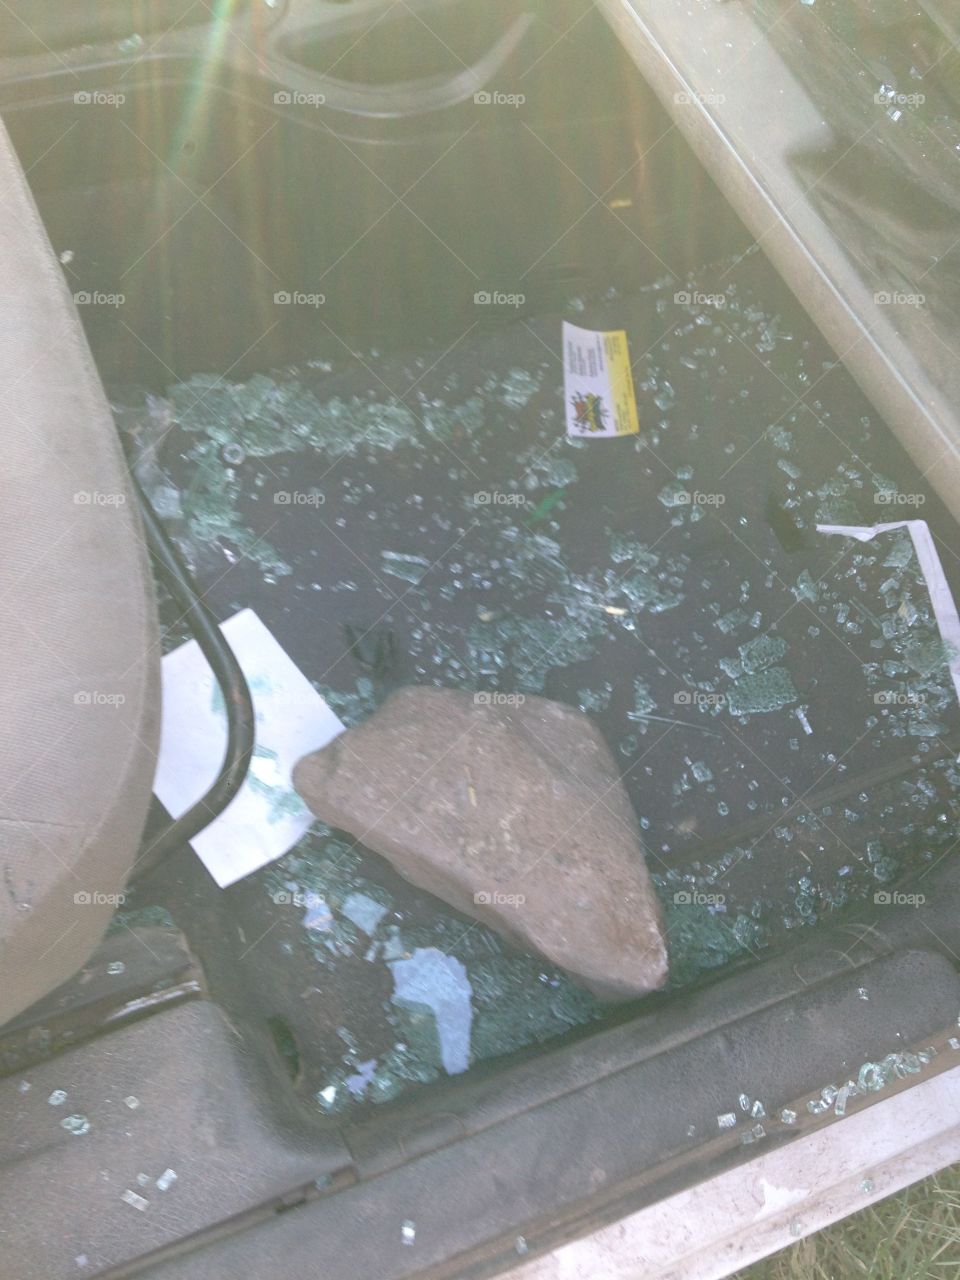 Broken car window with stone